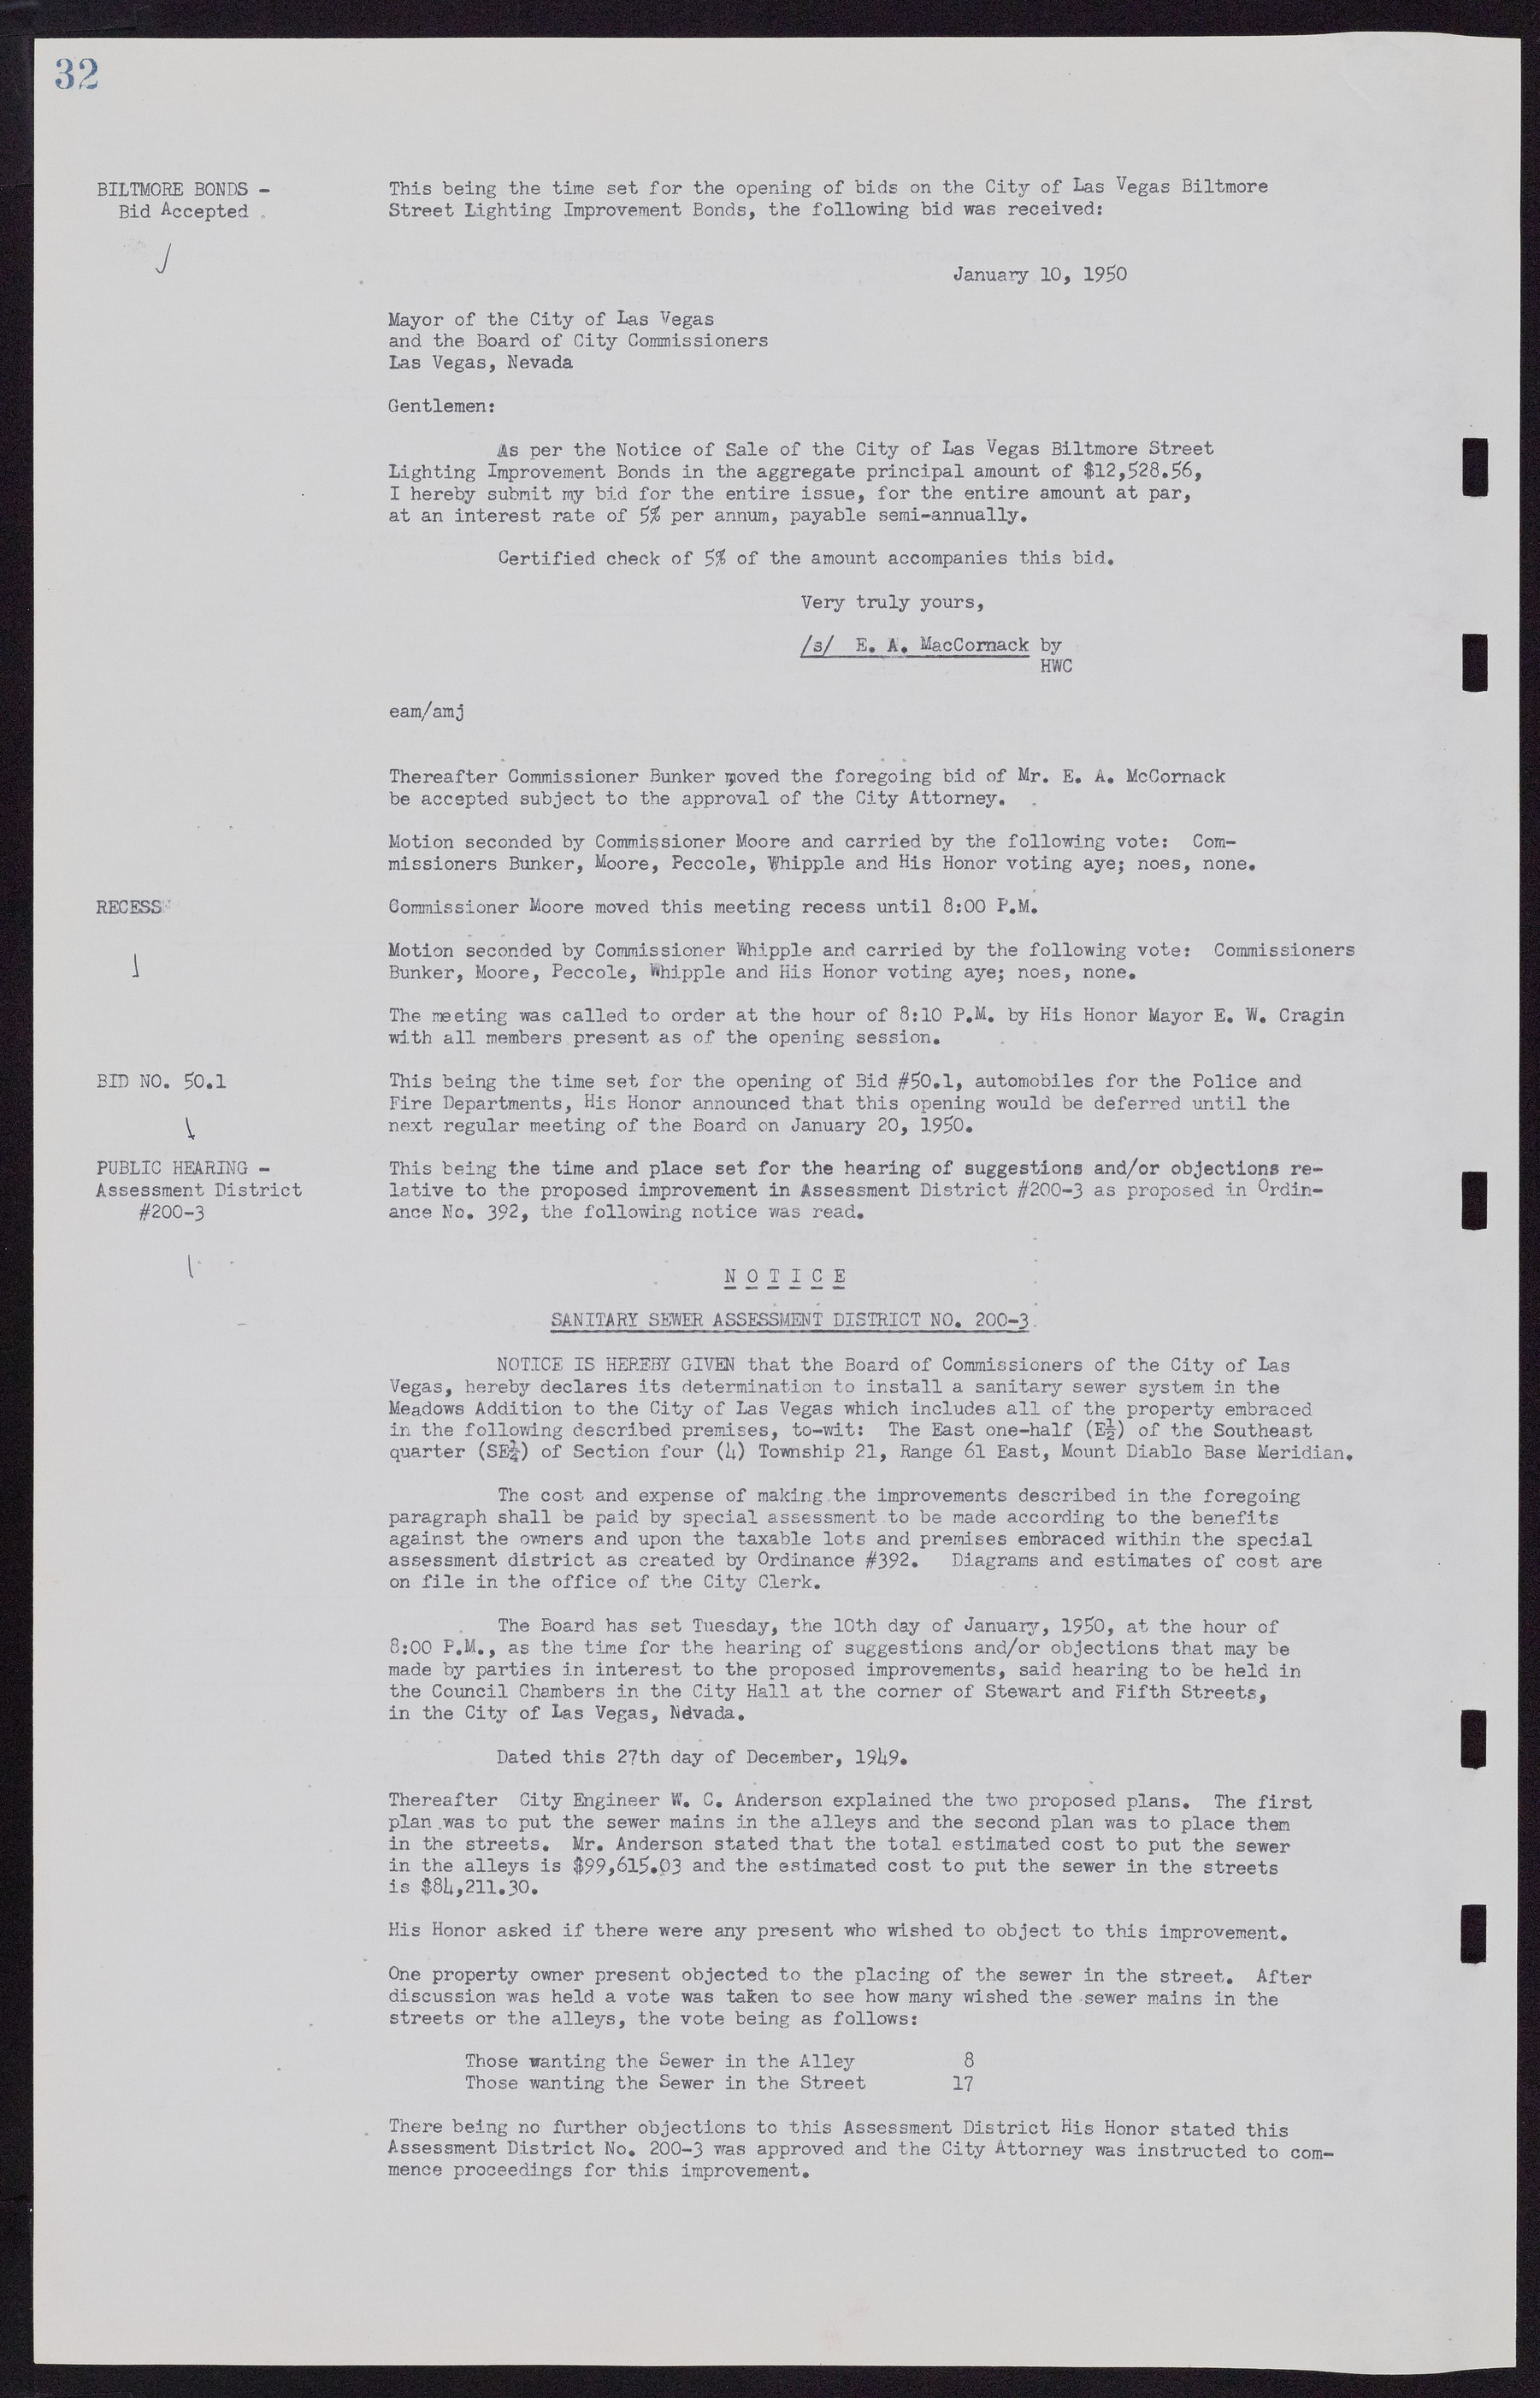 Las Vegas City Commission Minutes, November 7, 1949 to May 21, 1952, lvc000007-40